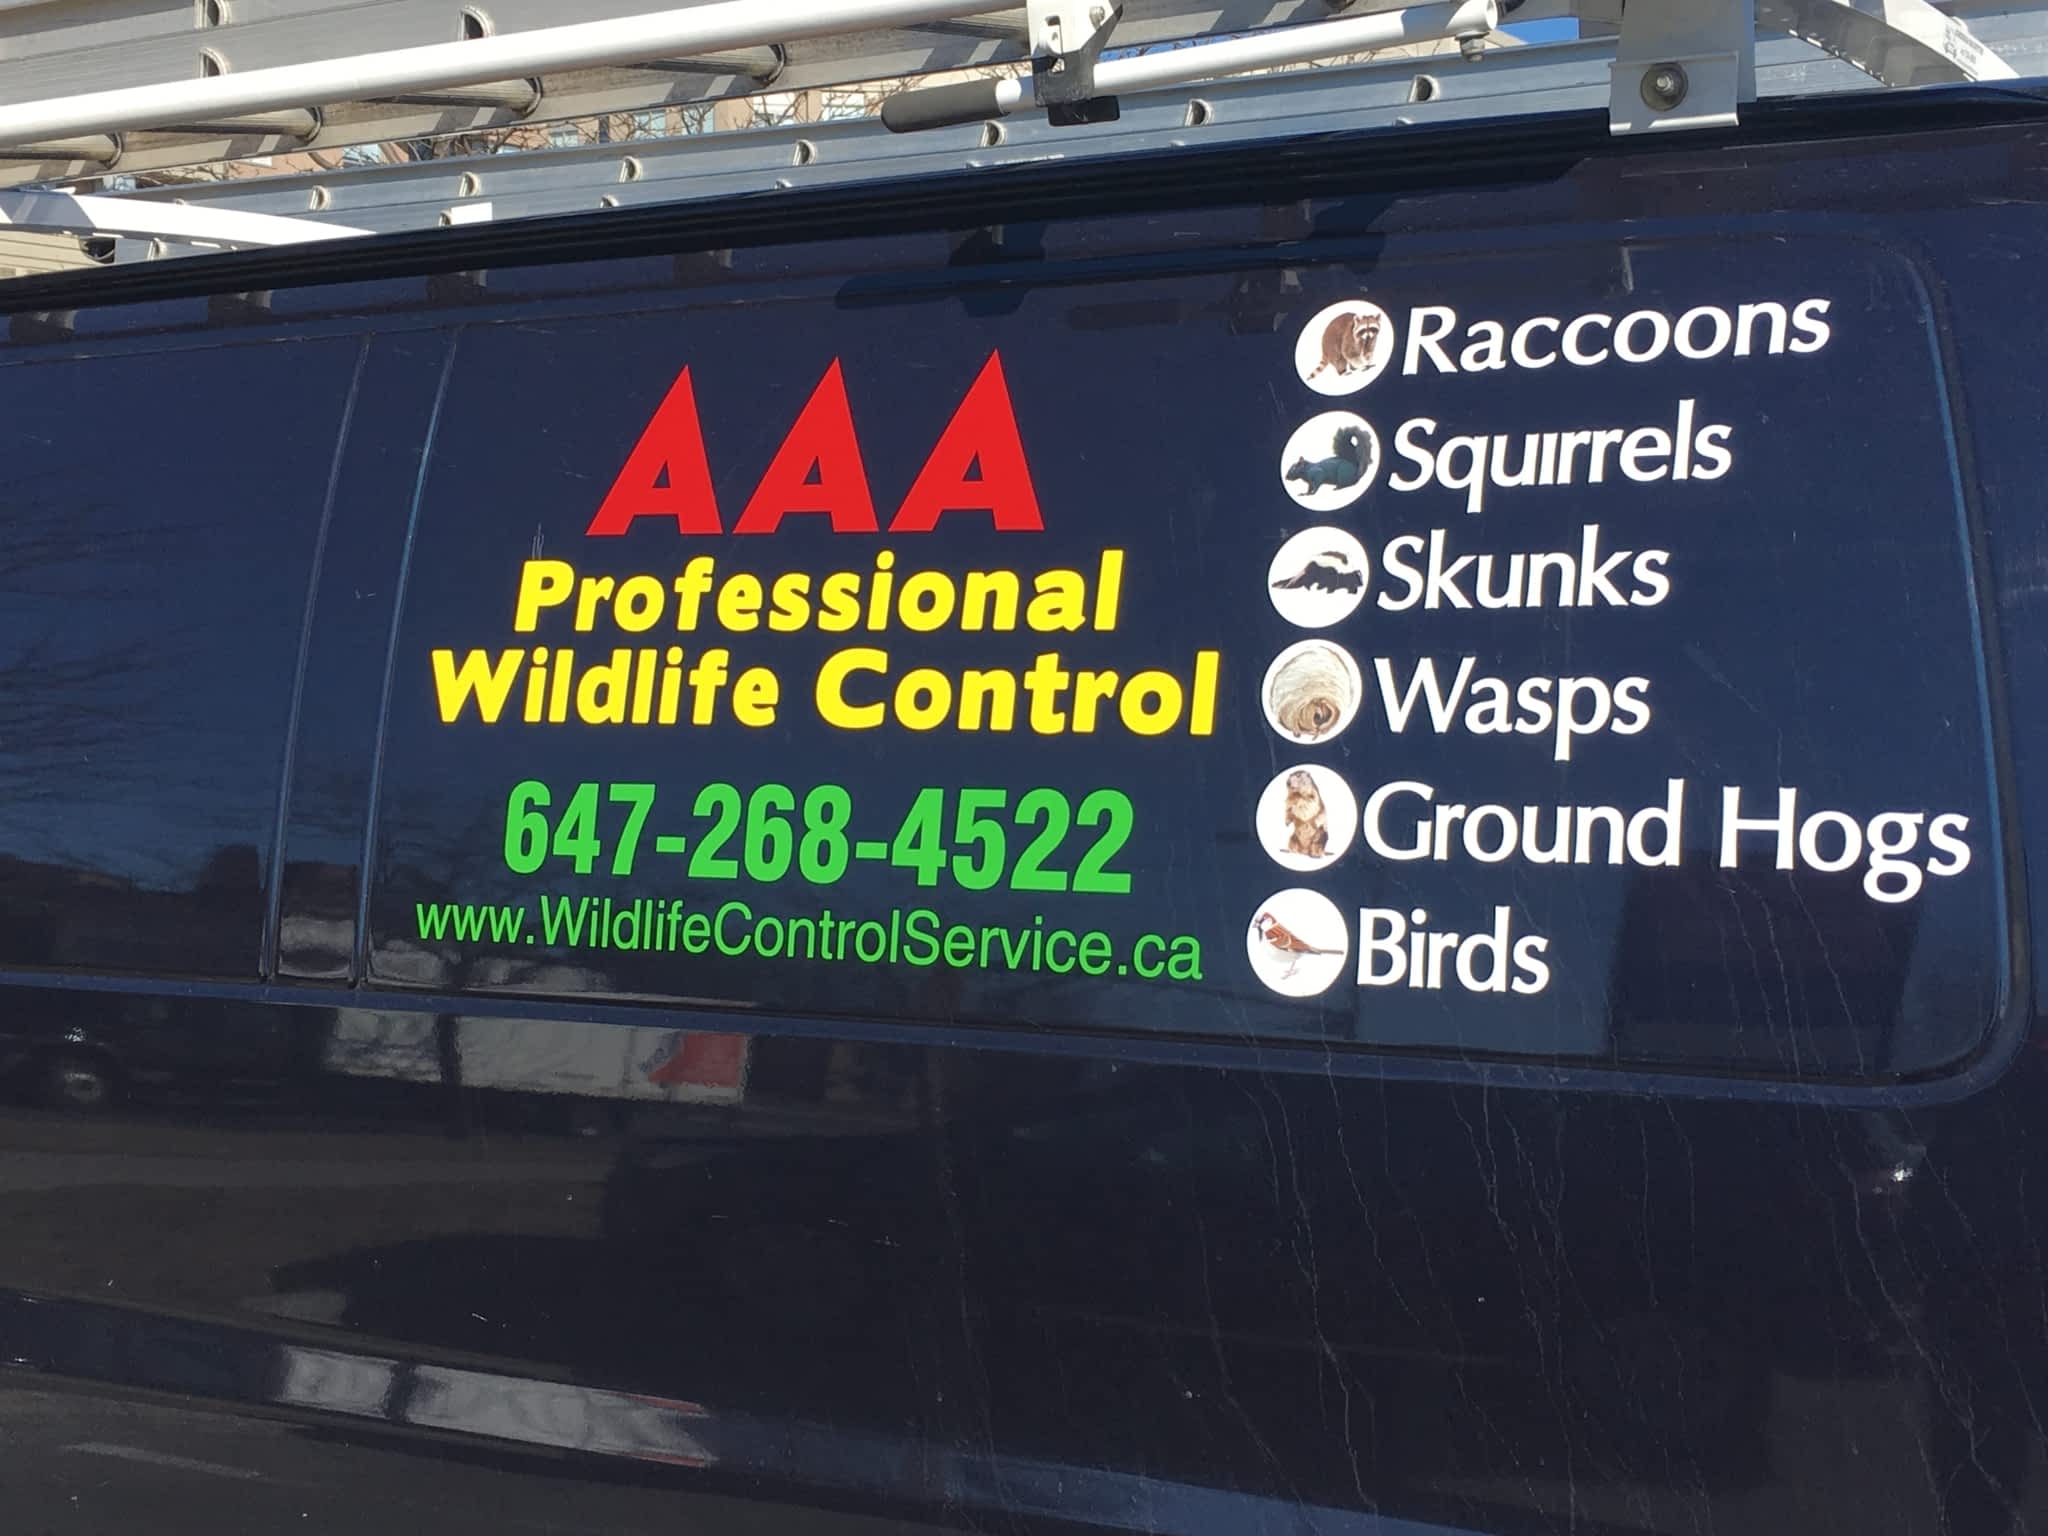 photo AAA Professional Wildlife Control